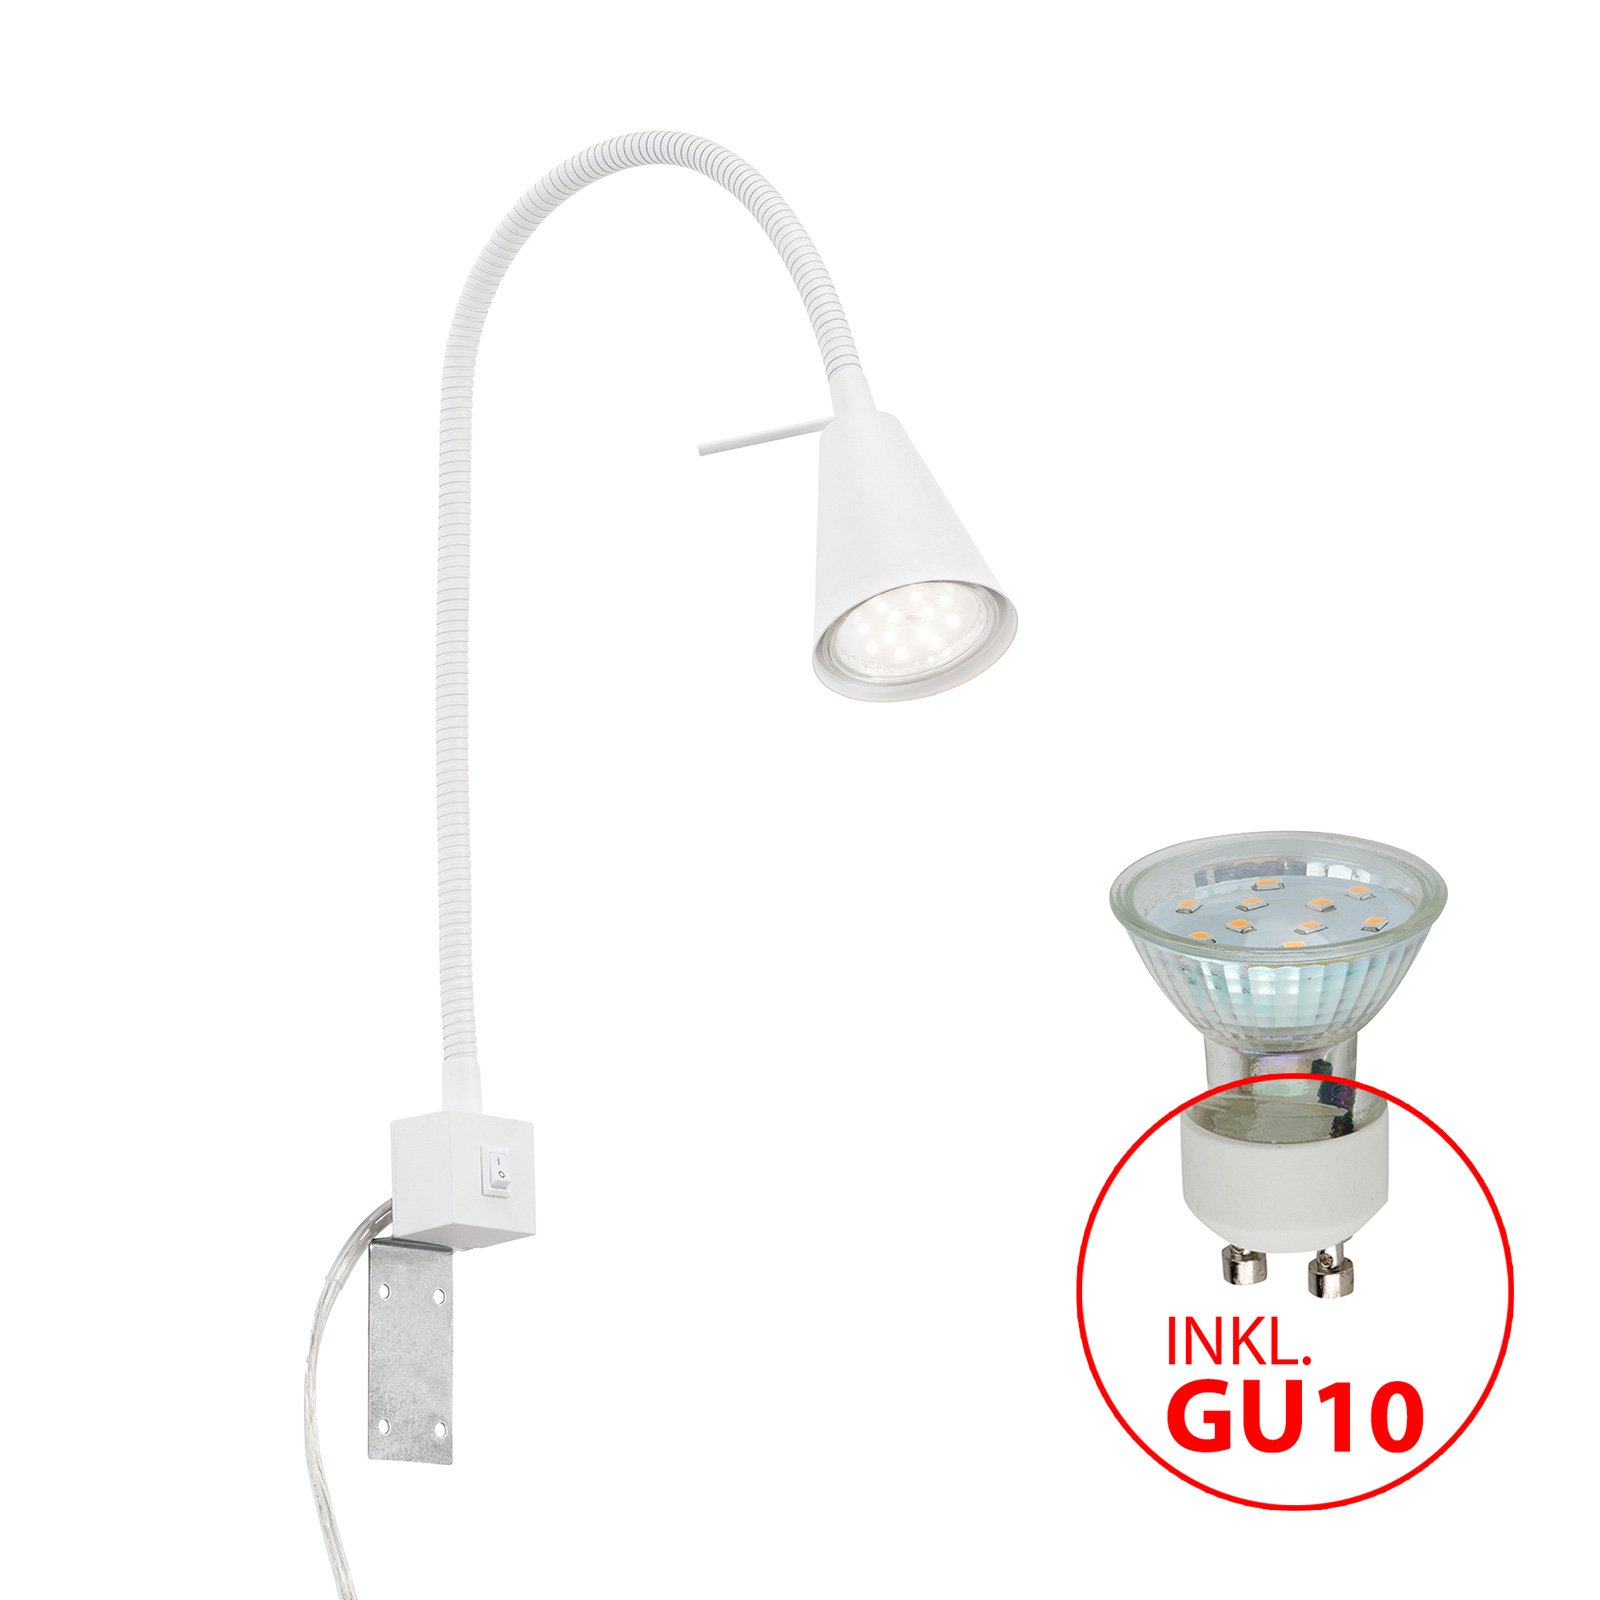 LED-Wandlampe Tuso, Bettmontage, weiß